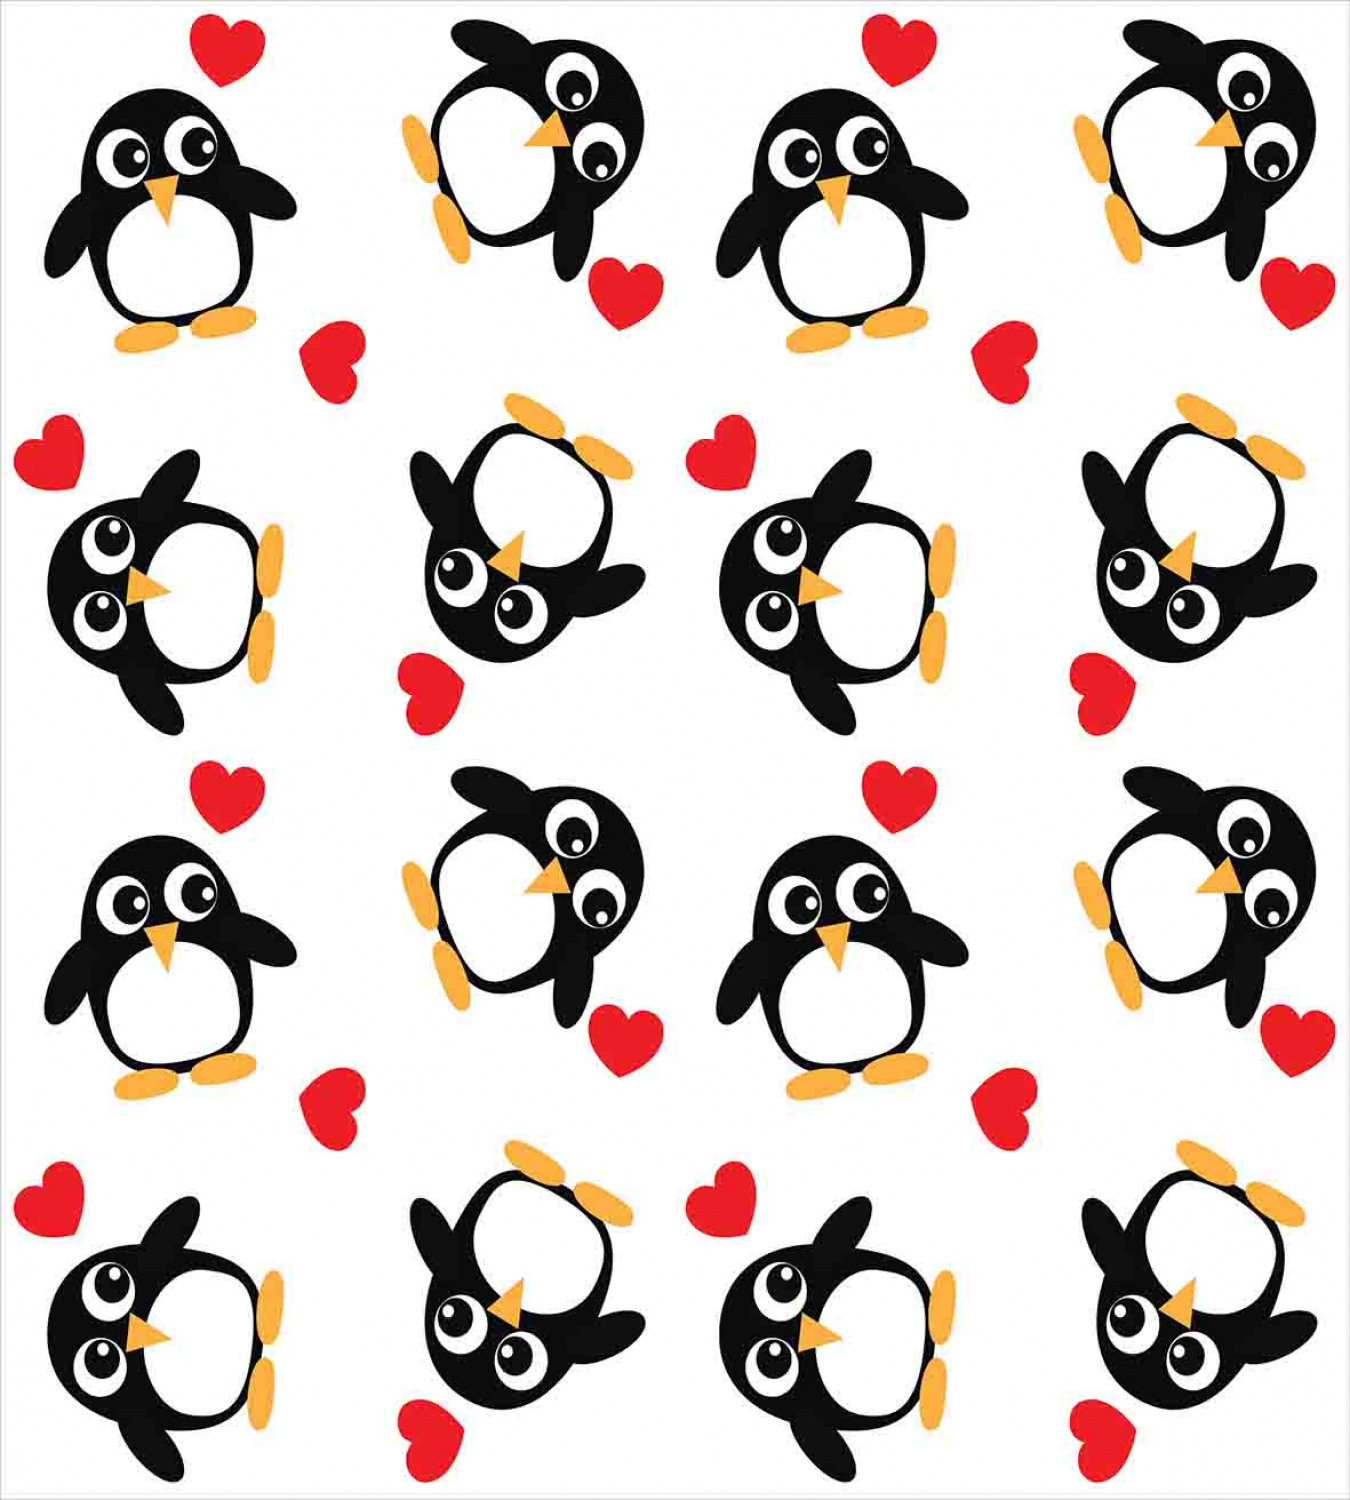 Penguin Quilted Bedspread & Pillow Shams Set Romance Heart Shape Print 